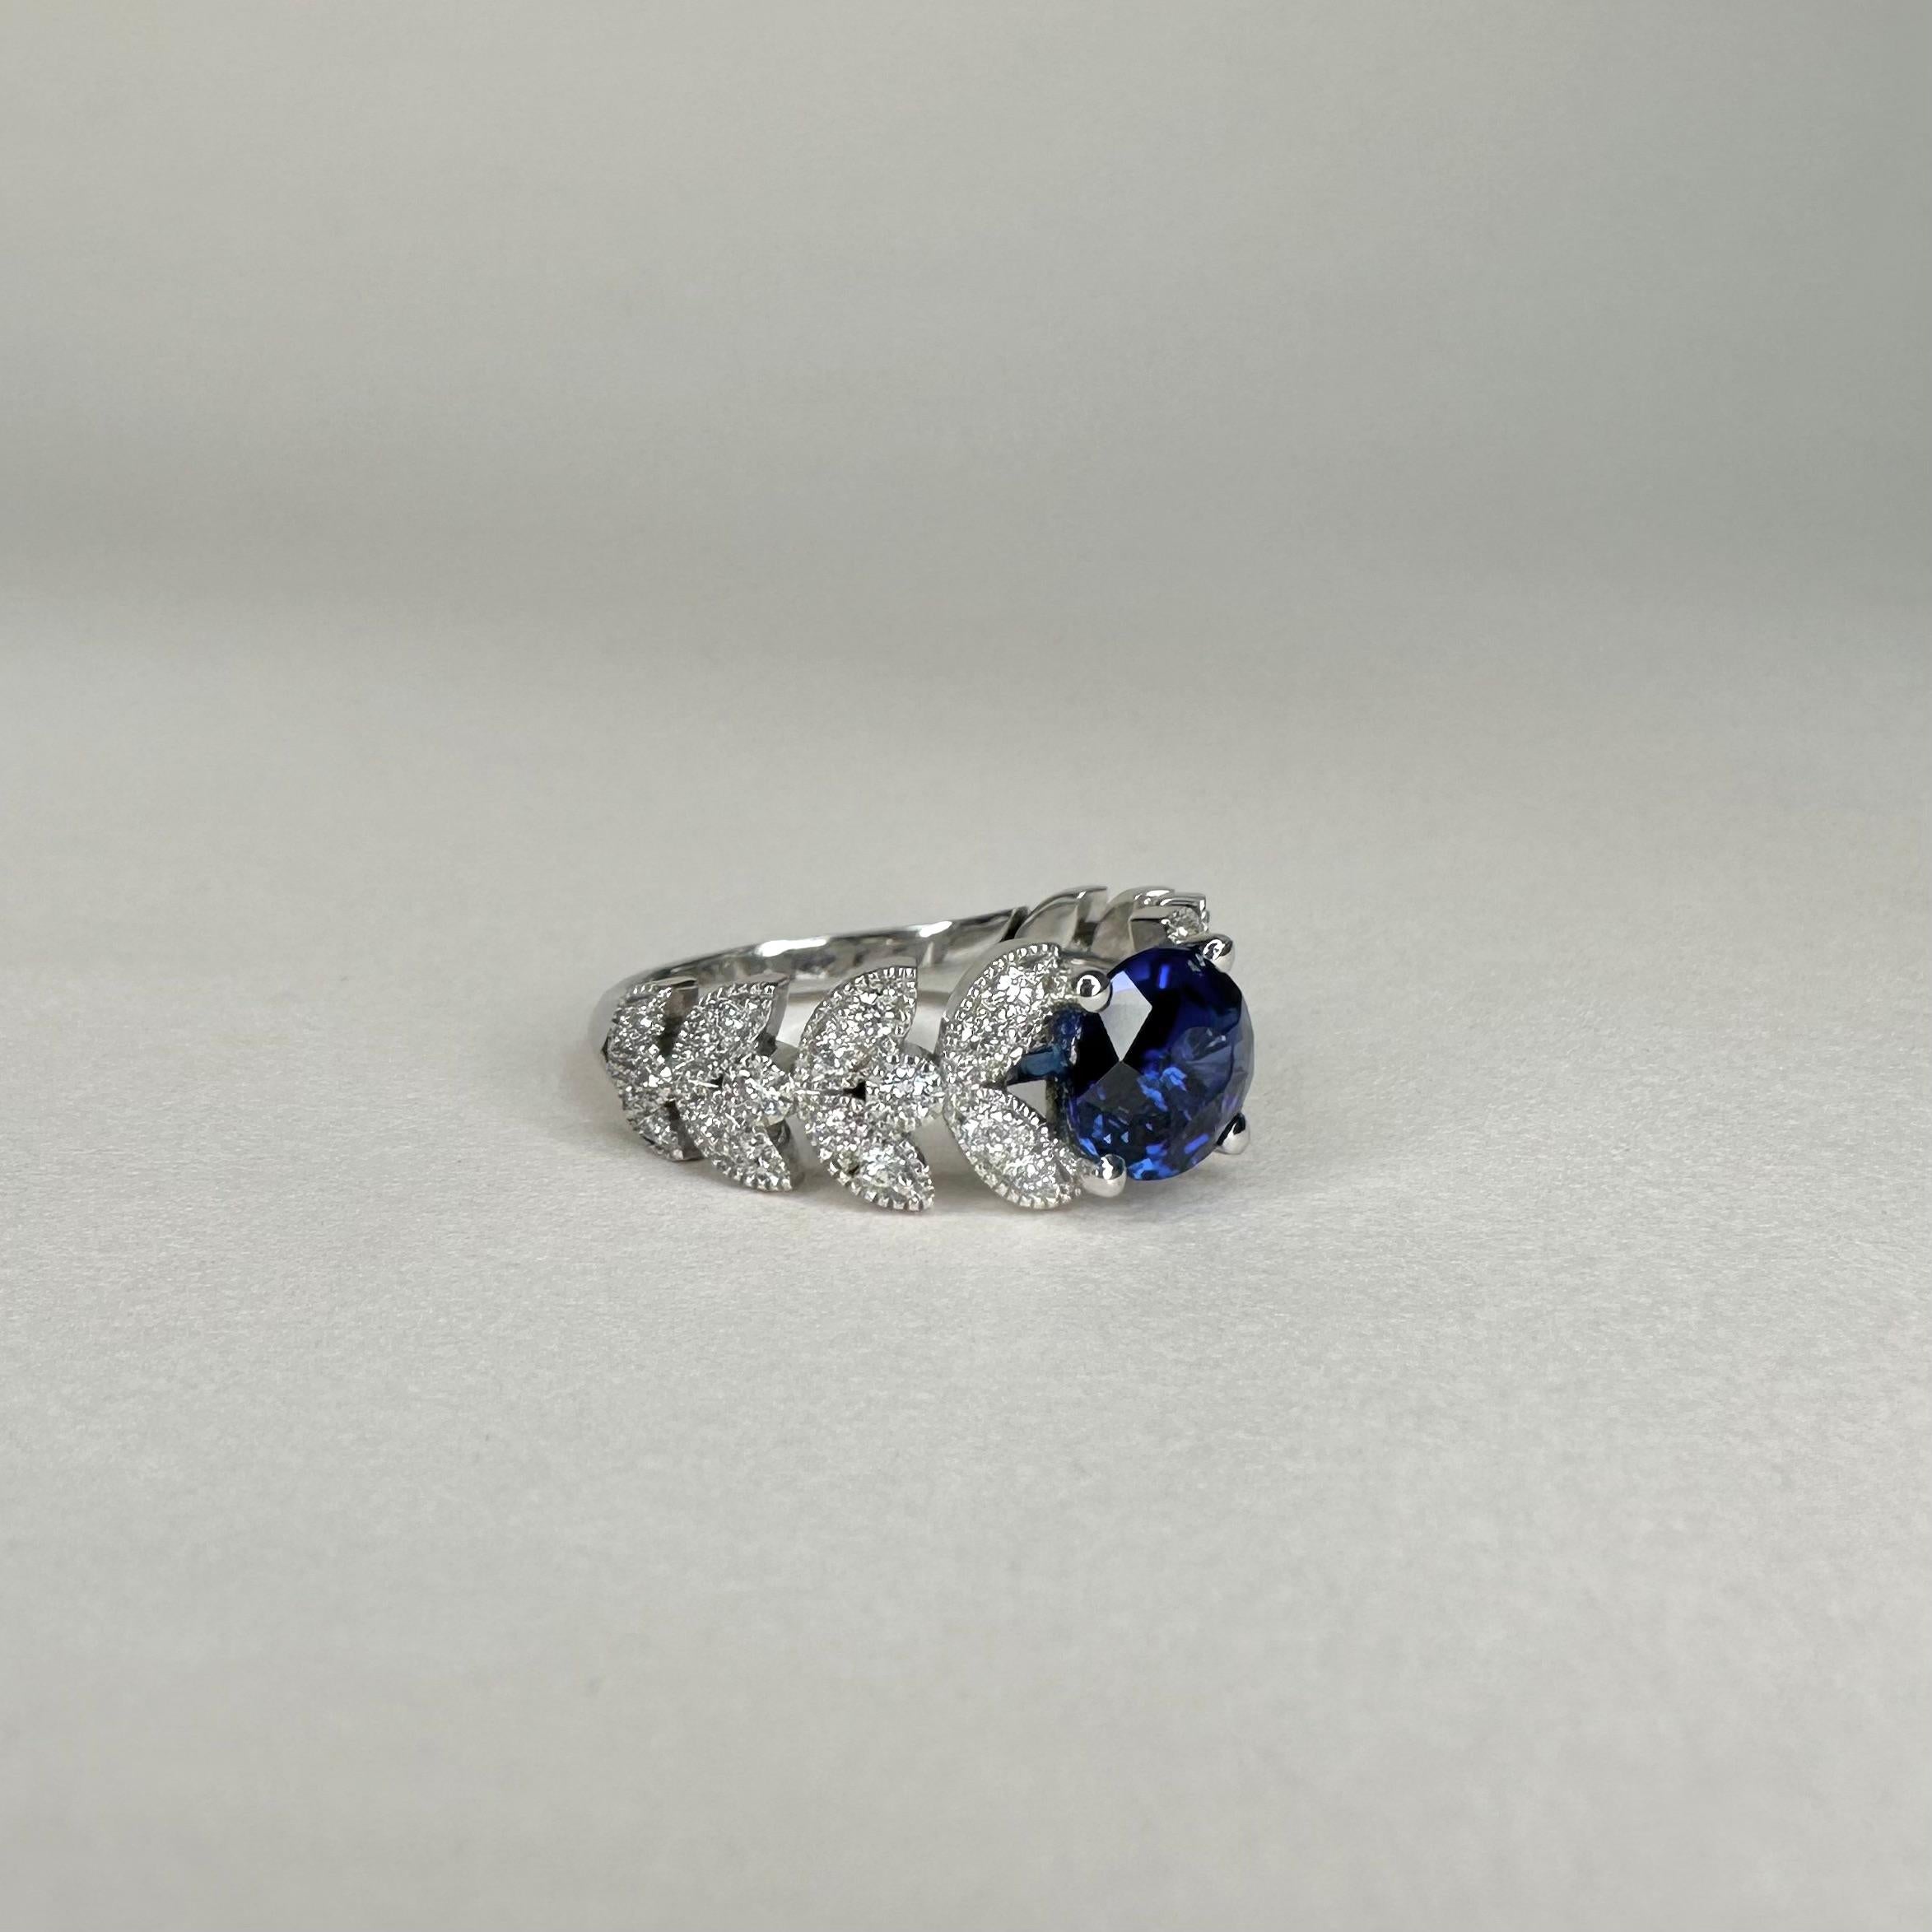 For Sale:  18k White Gold Laurel Leaf Design Ring Set with 1.53 Ct Royal Blue Oval Sapphire 5